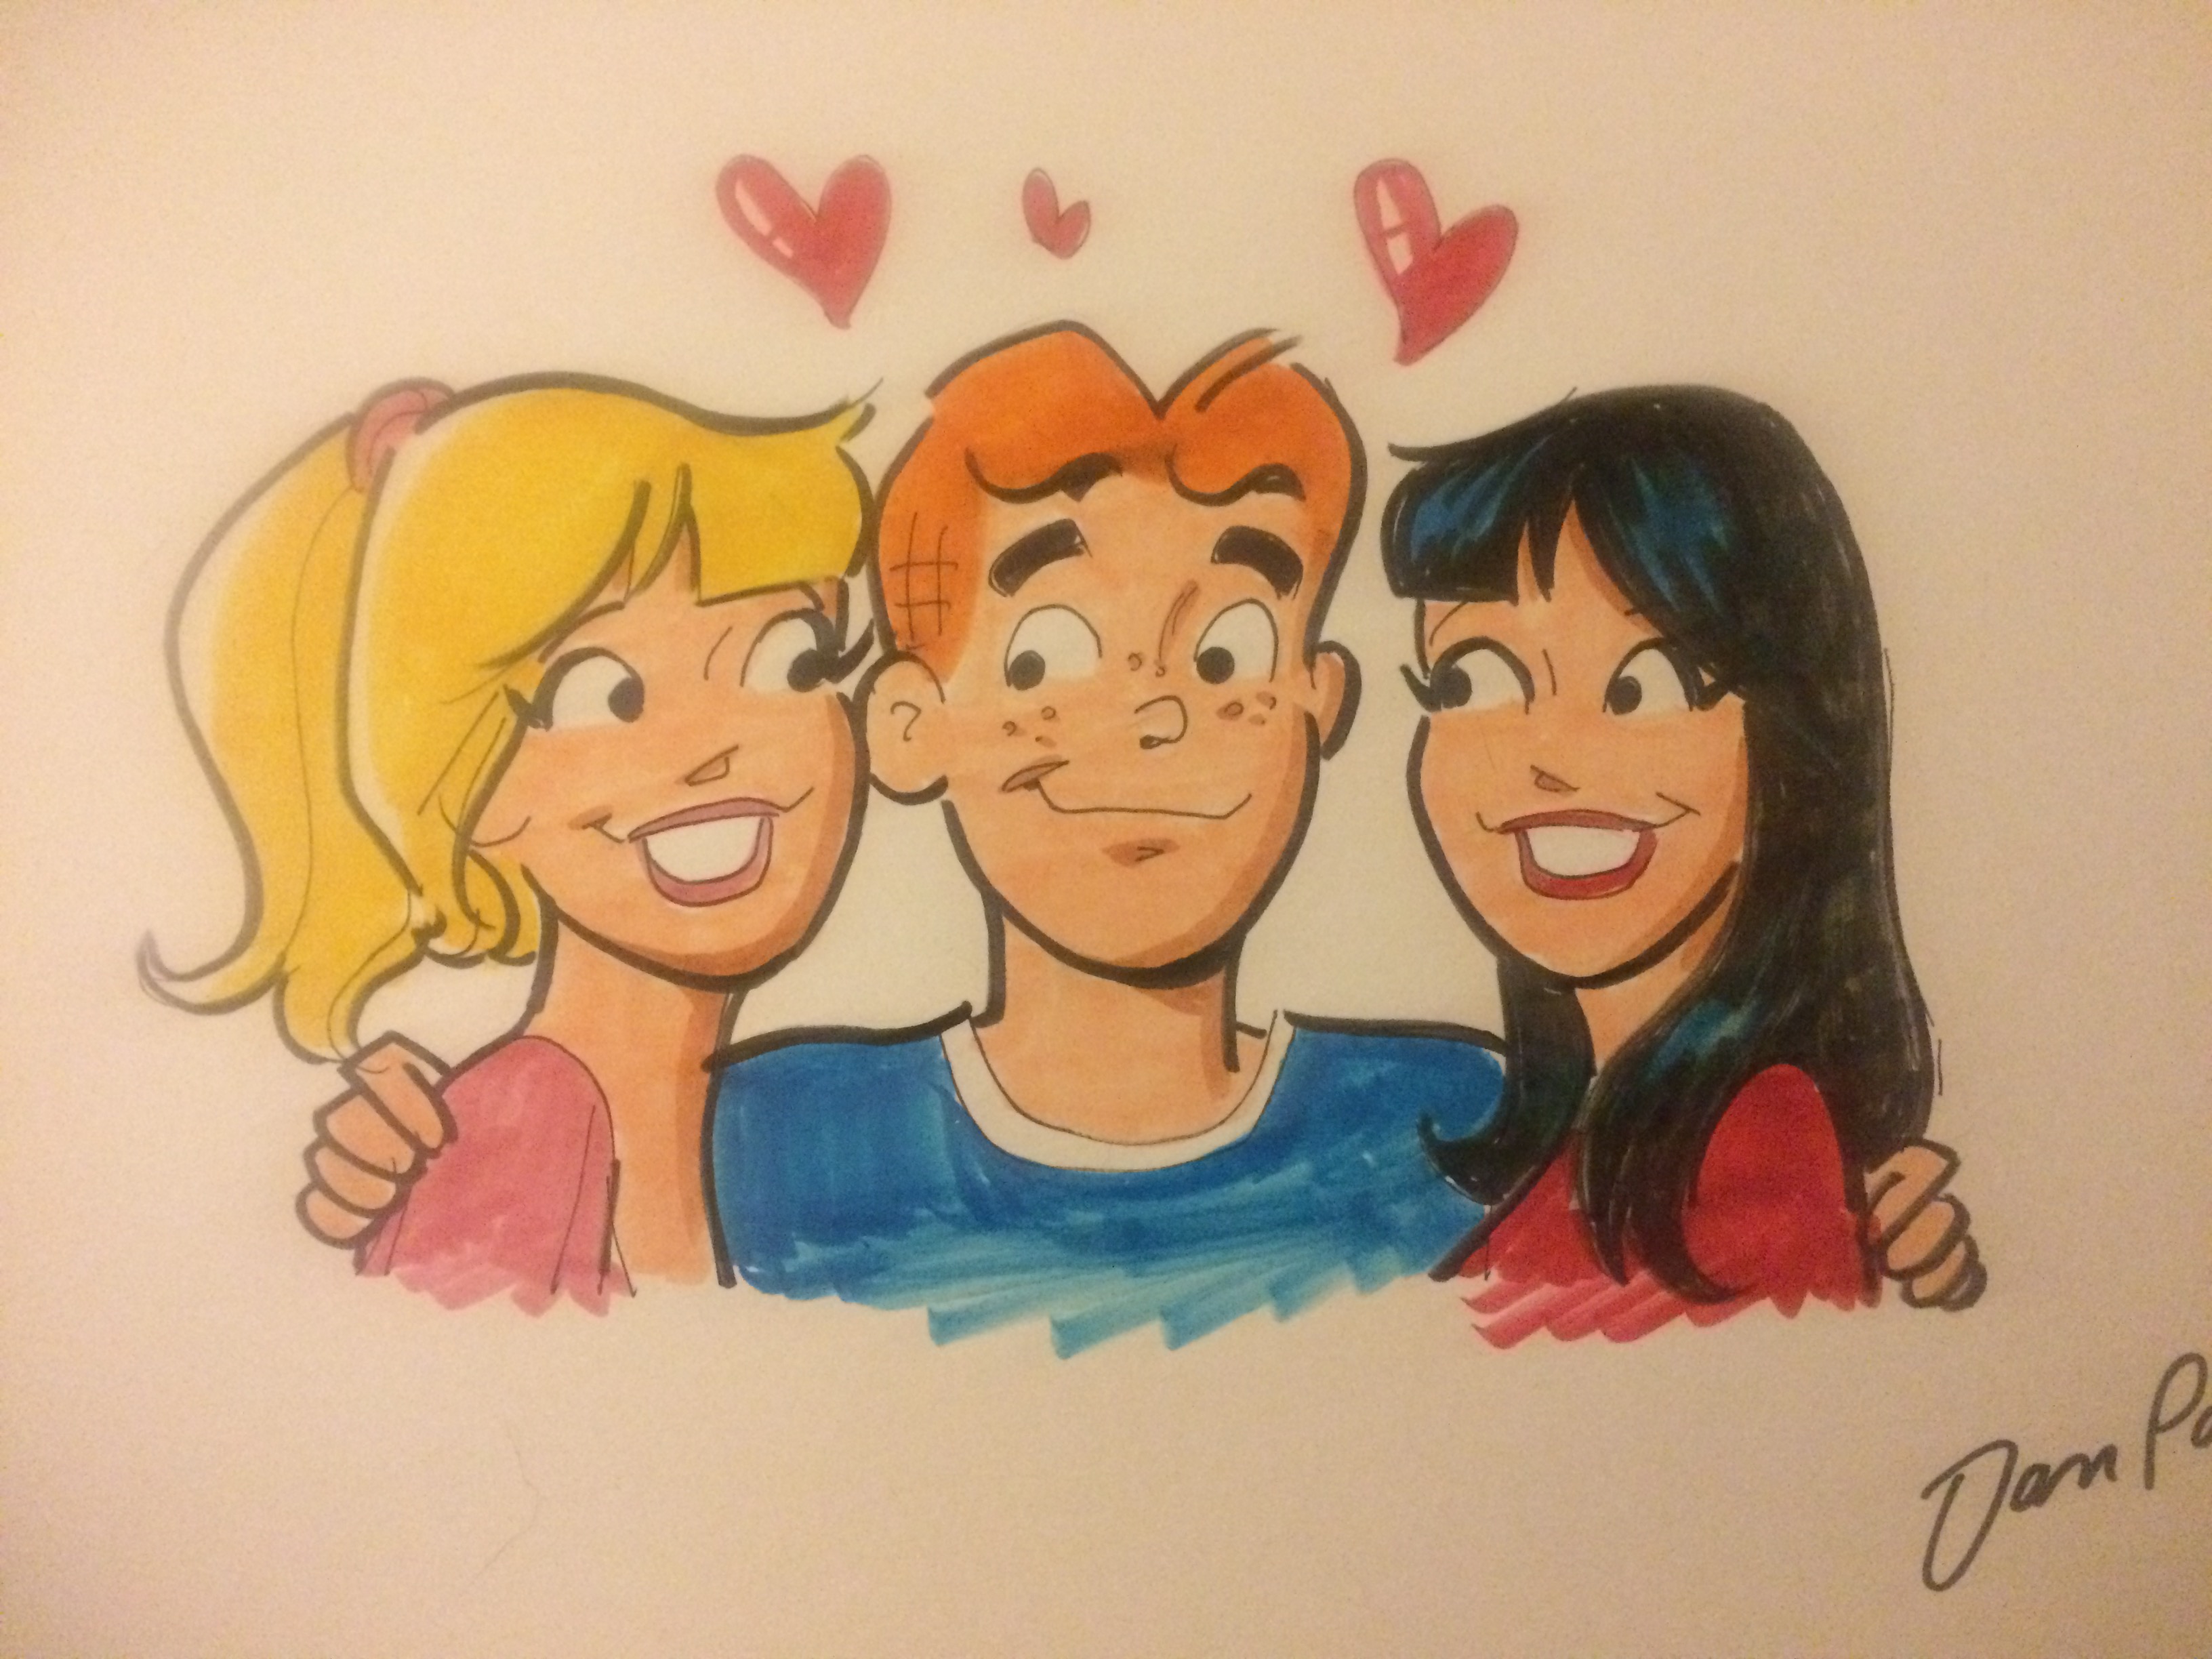 Riffster's Archie art